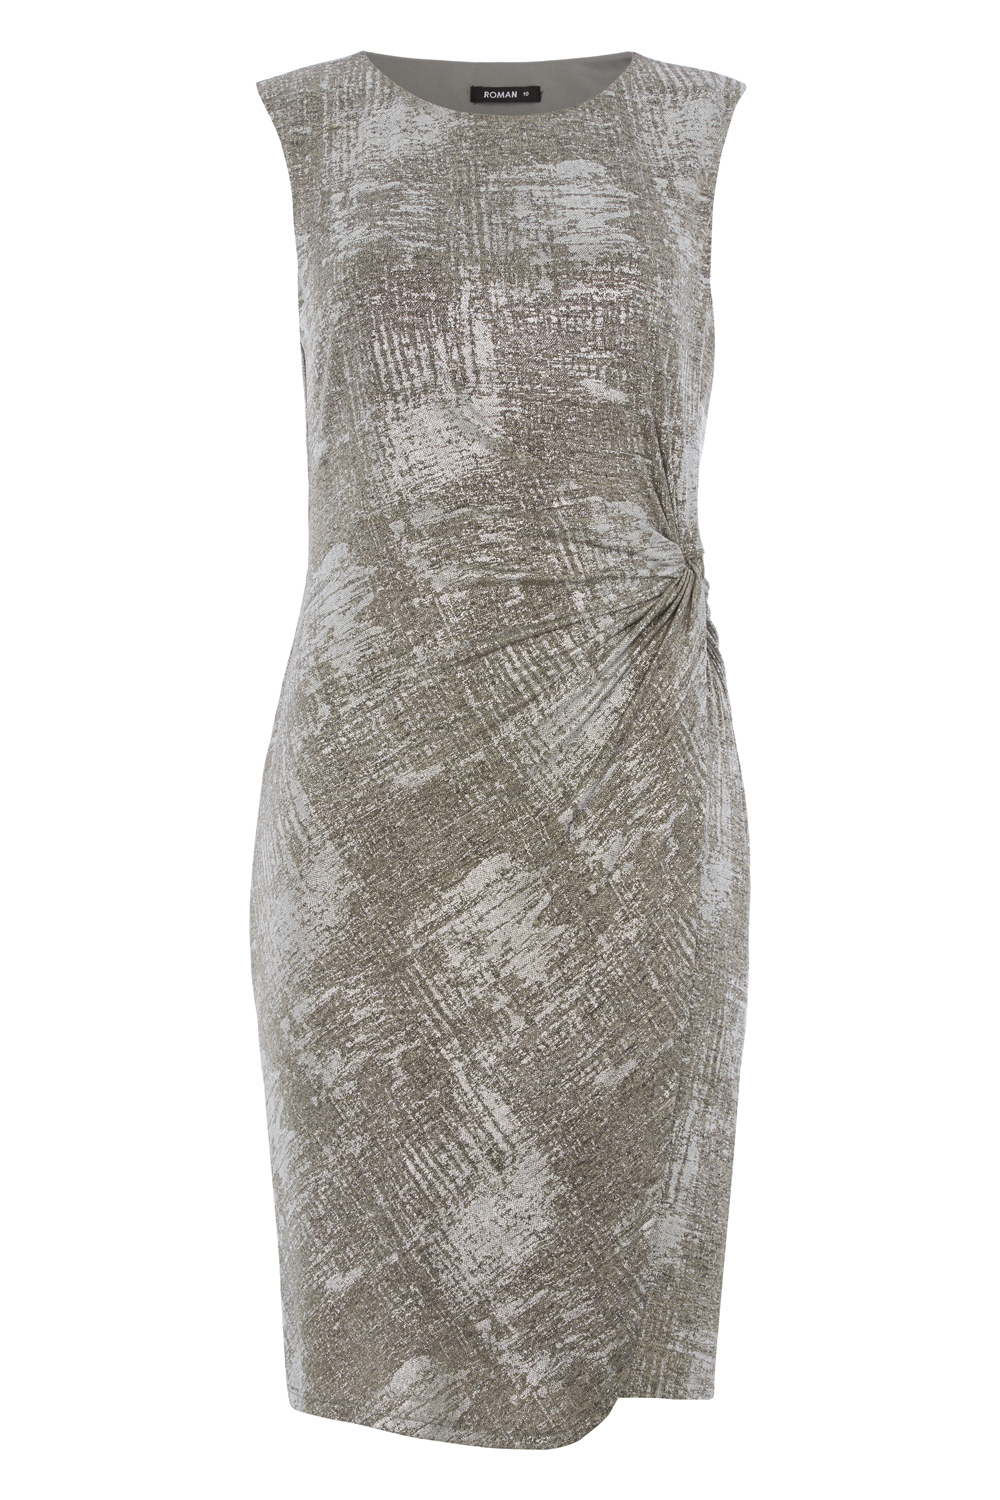 Metallic Foil Dress in Silver - Roman Originals UK